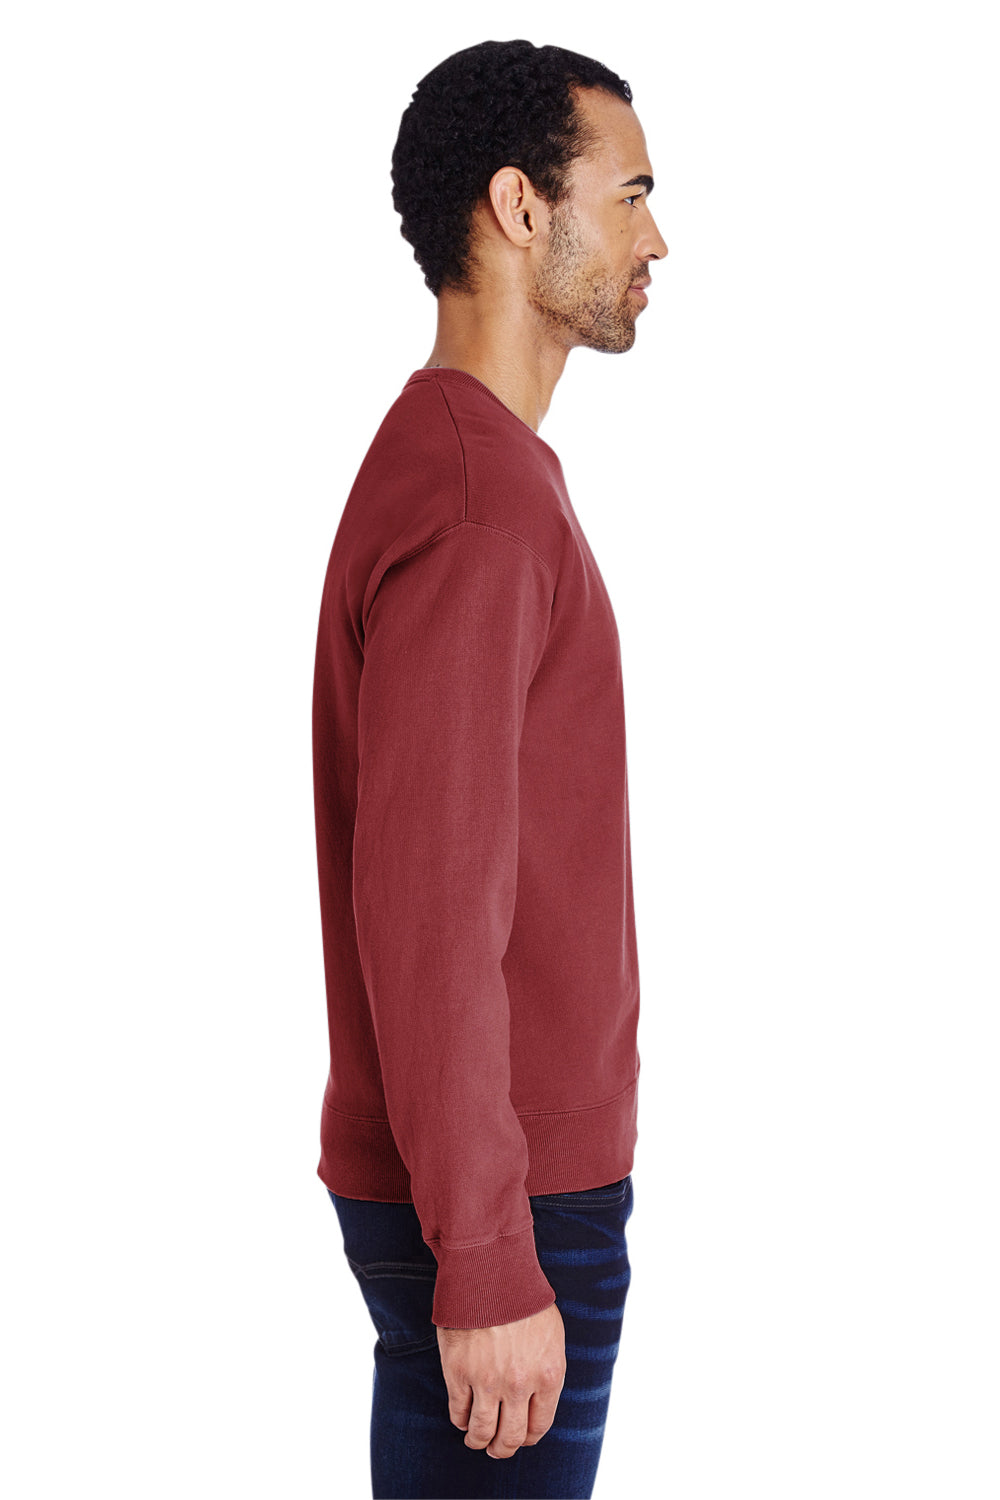 ComfortWash by Hanes GDH400 Crewneck Sweatshirt Cayenne Red Side